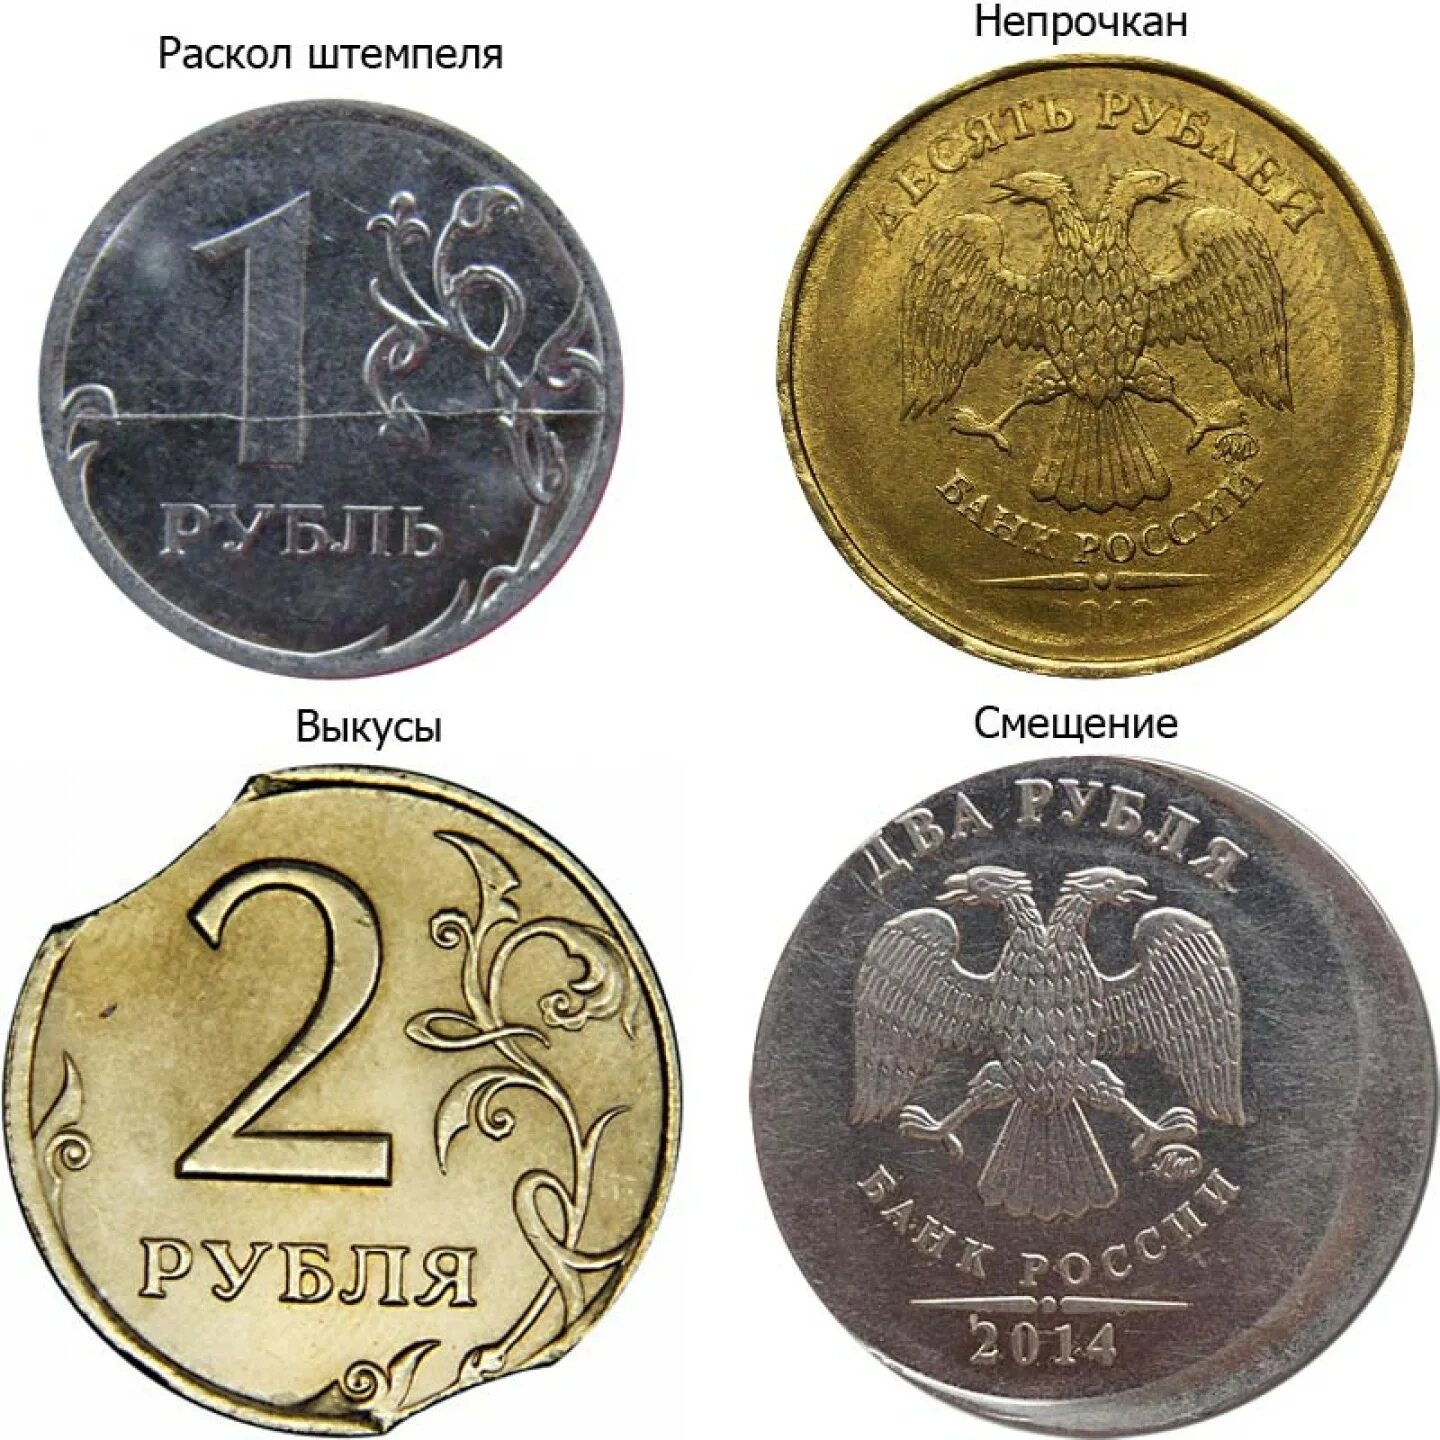 Легендарные монеты. Дорогие монеты. Редкие монеты. Редкие дорогие монеты. Современные дорогостоящие монеты.